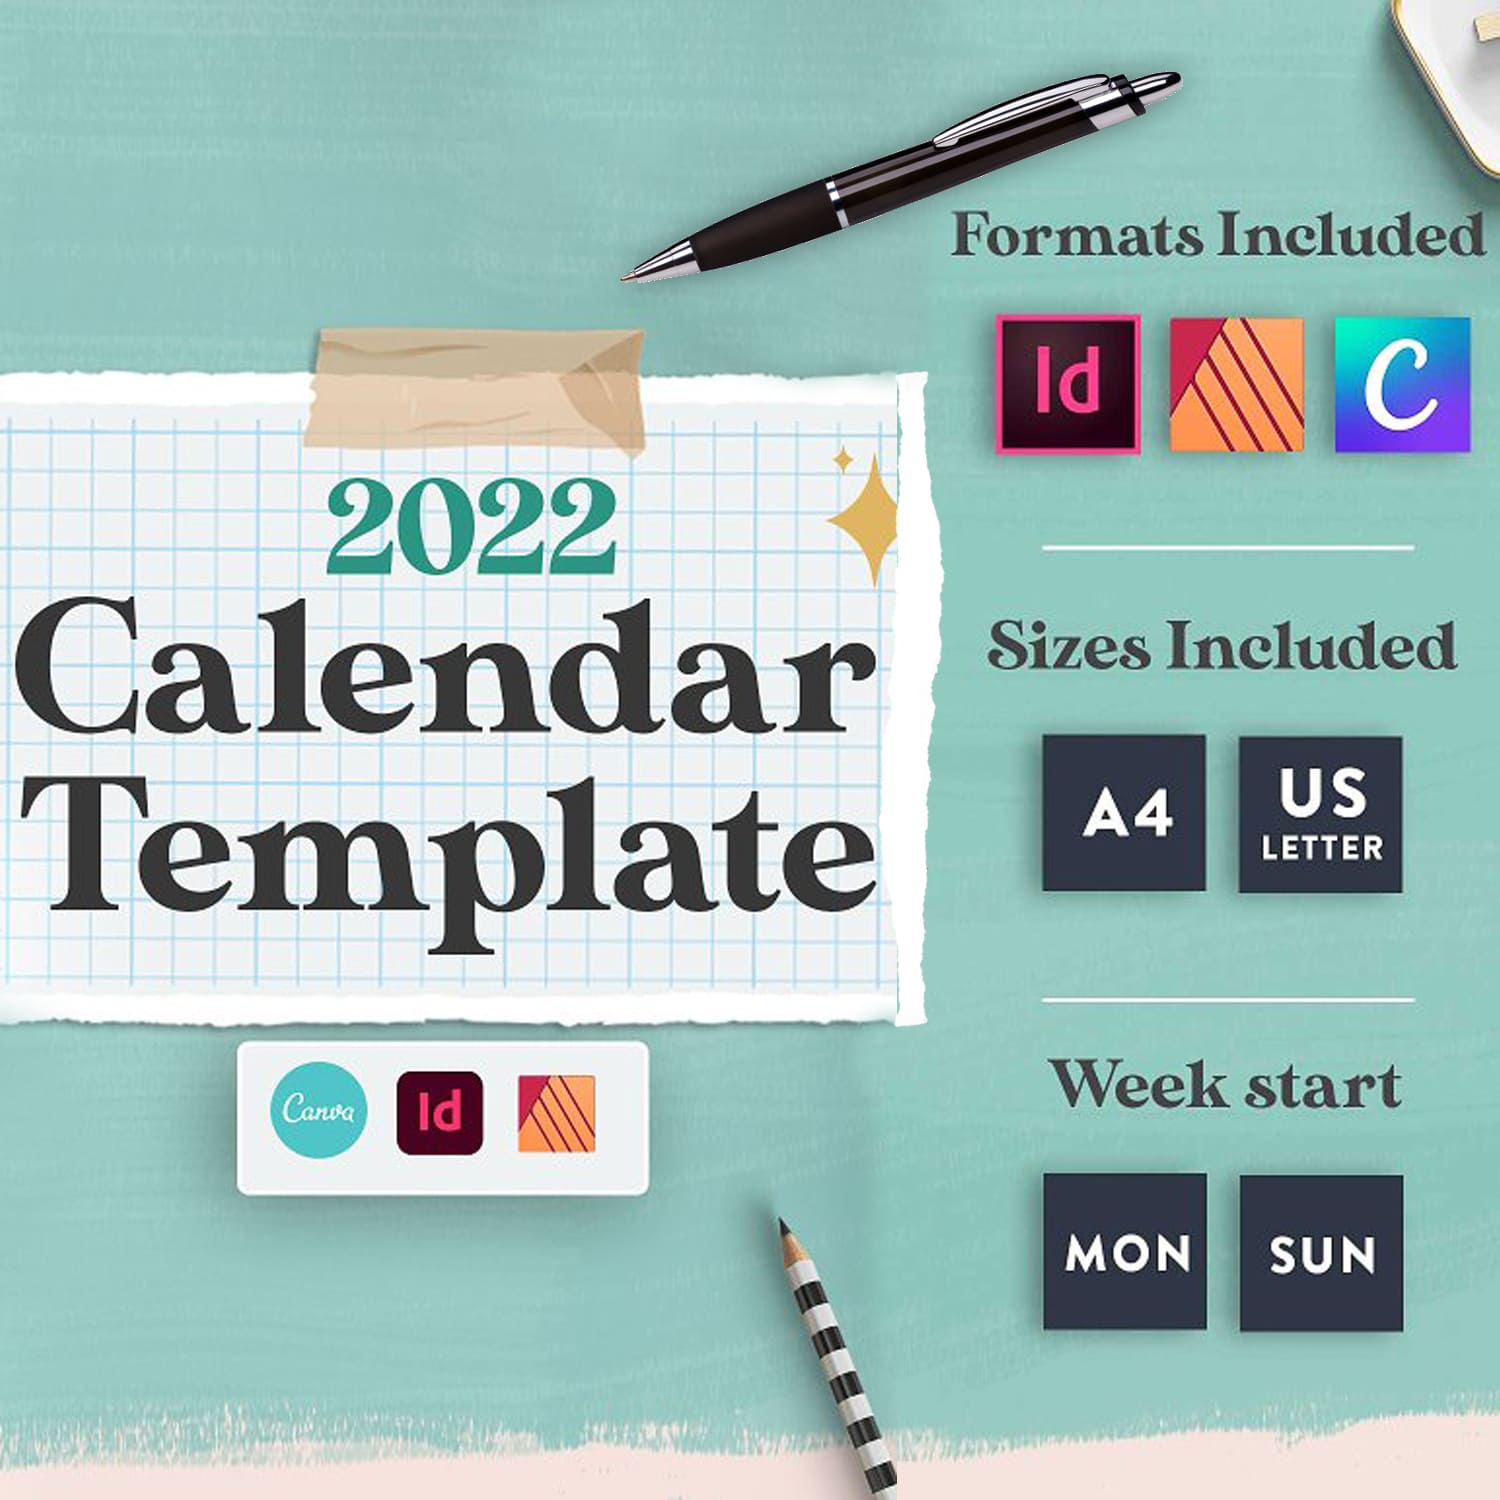 2022 Calendar Template Canva cover.